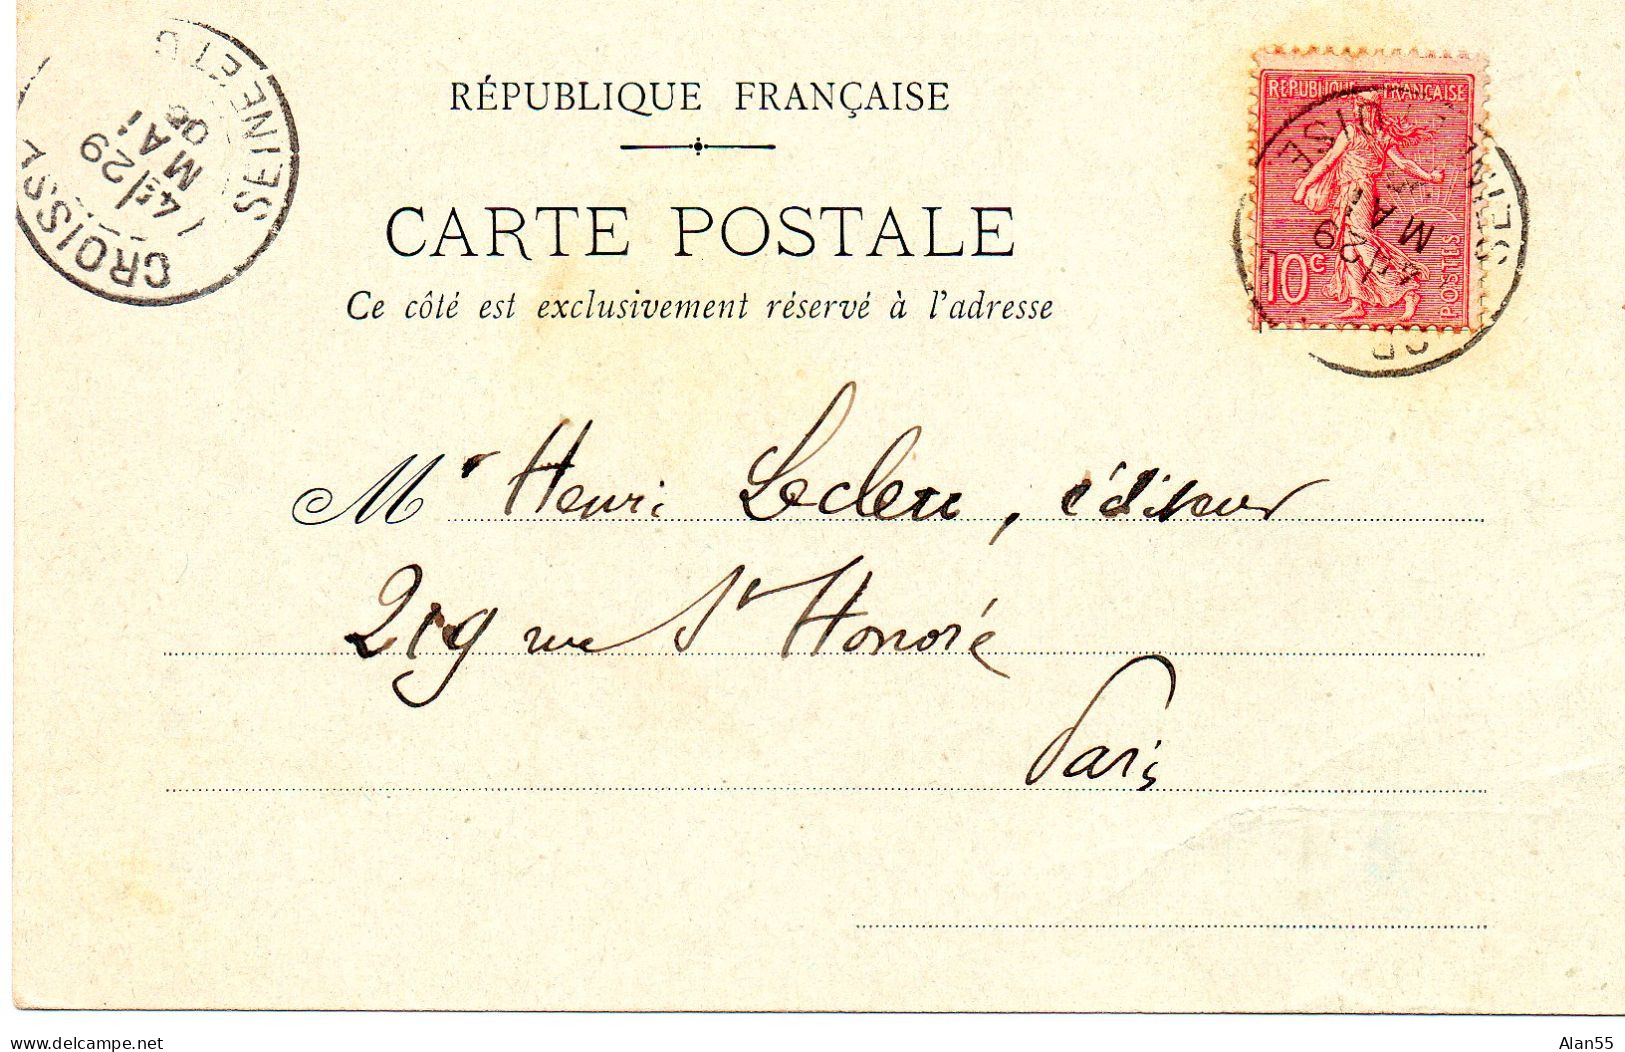 FRANCE.1905.VARIETE PIQUAGE. 15C ROSE "SEMEUSE LIGNEE". - Covers & Documents